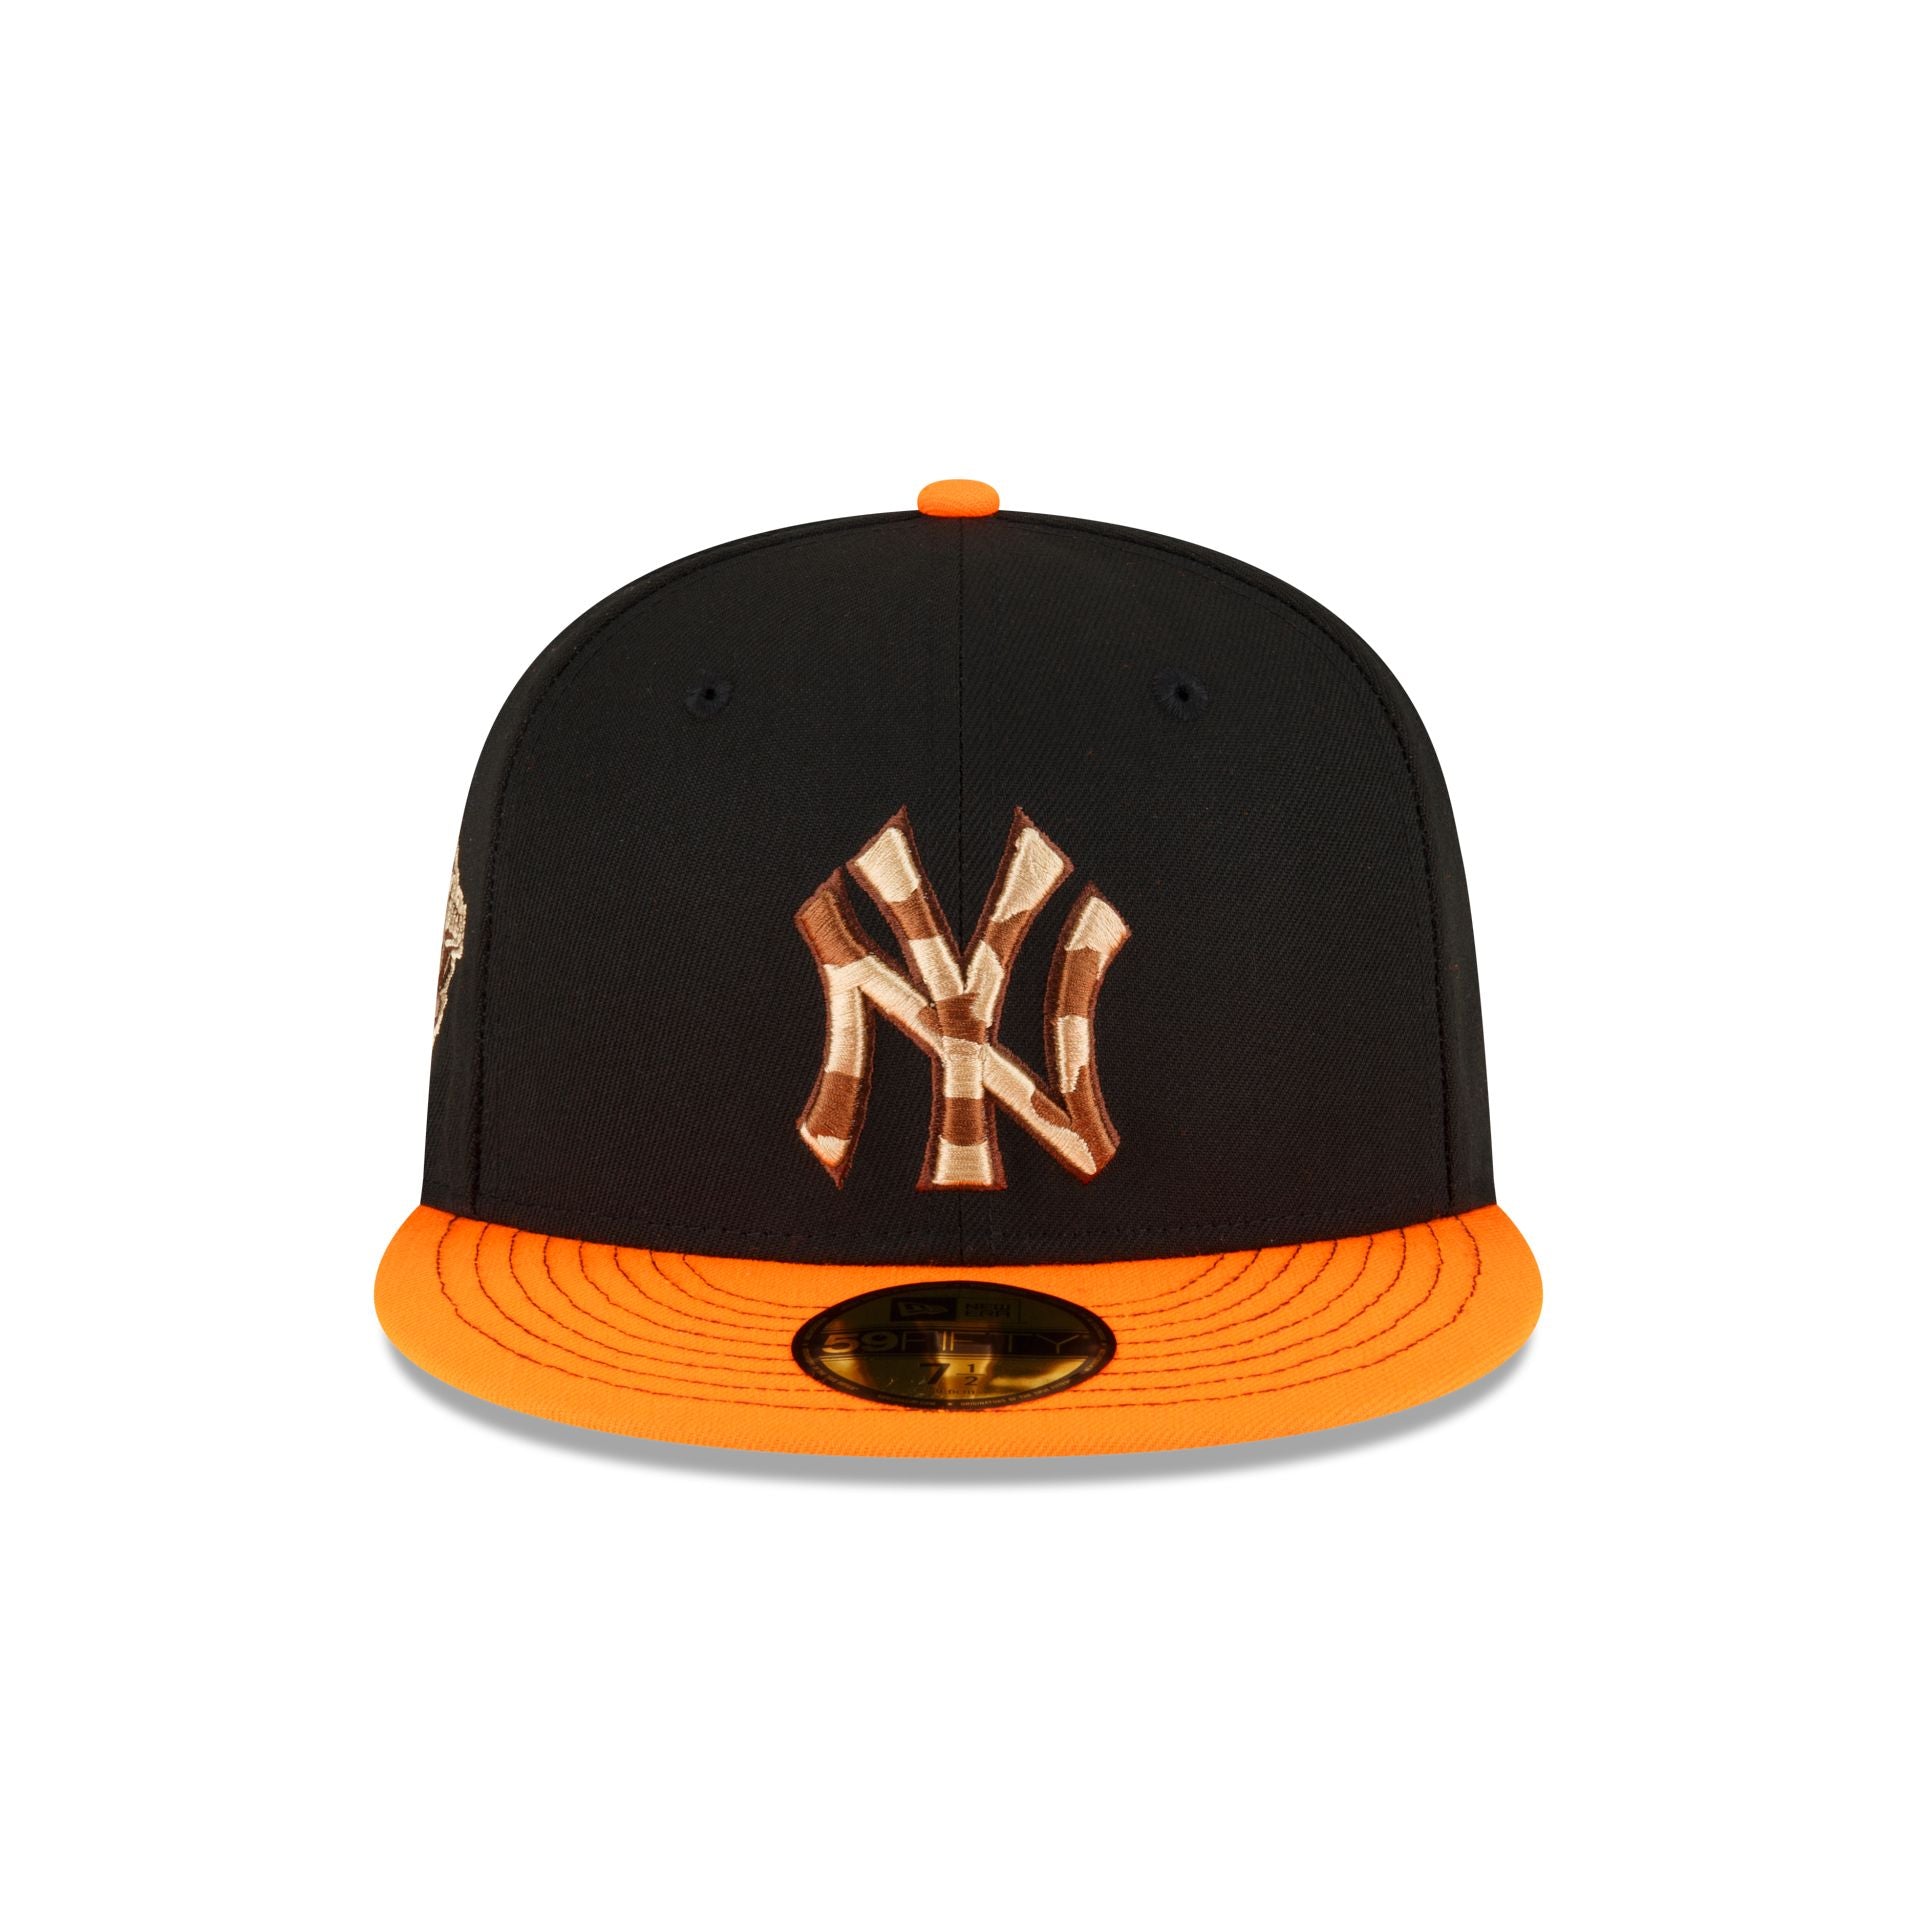 Just Caps Orange Visor New New Cap – Hat Era Fitted York 59FIFTY Yankees